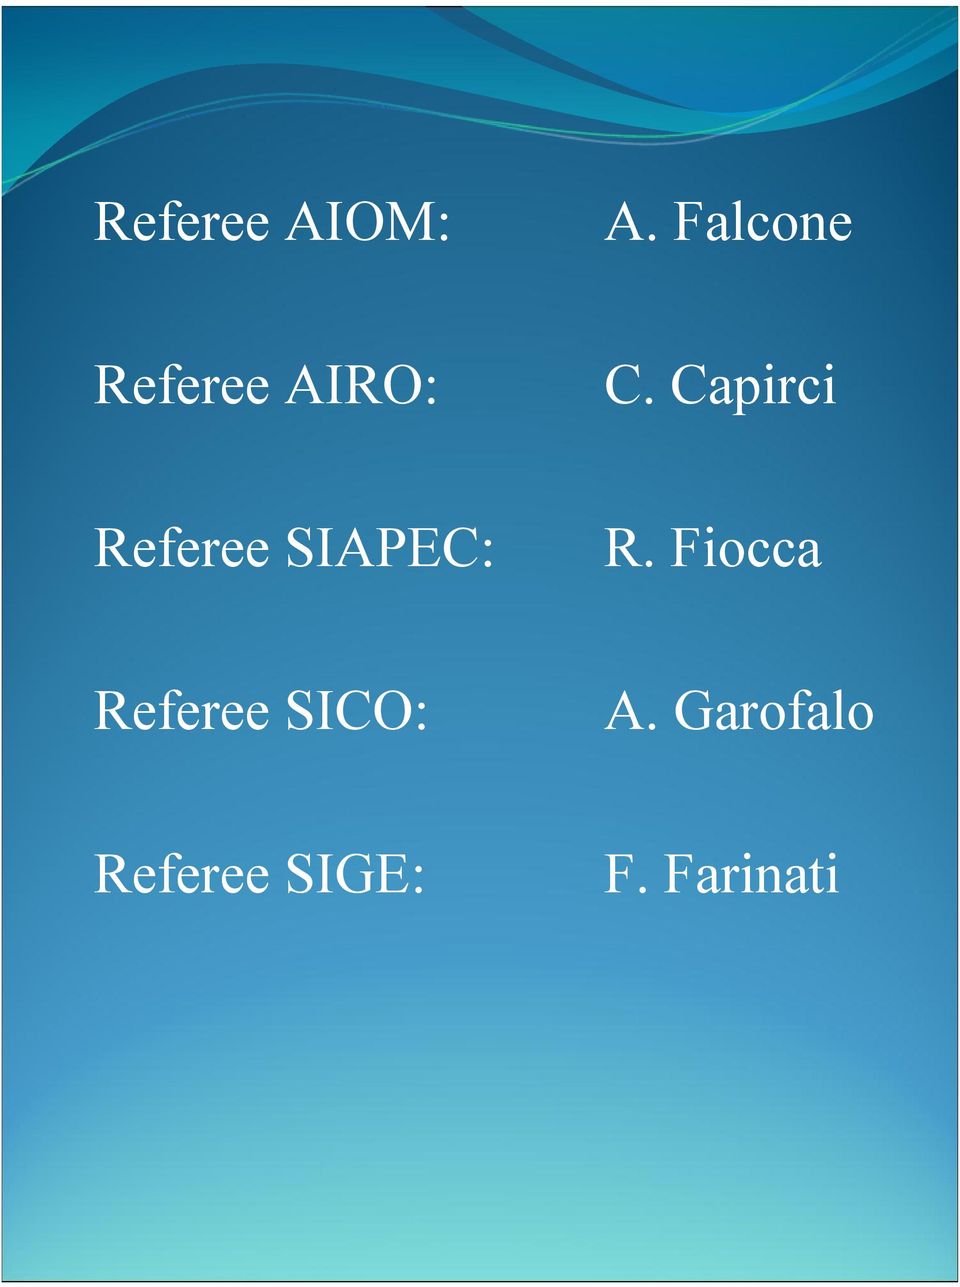 Capirci Referee SIAPEC: R.